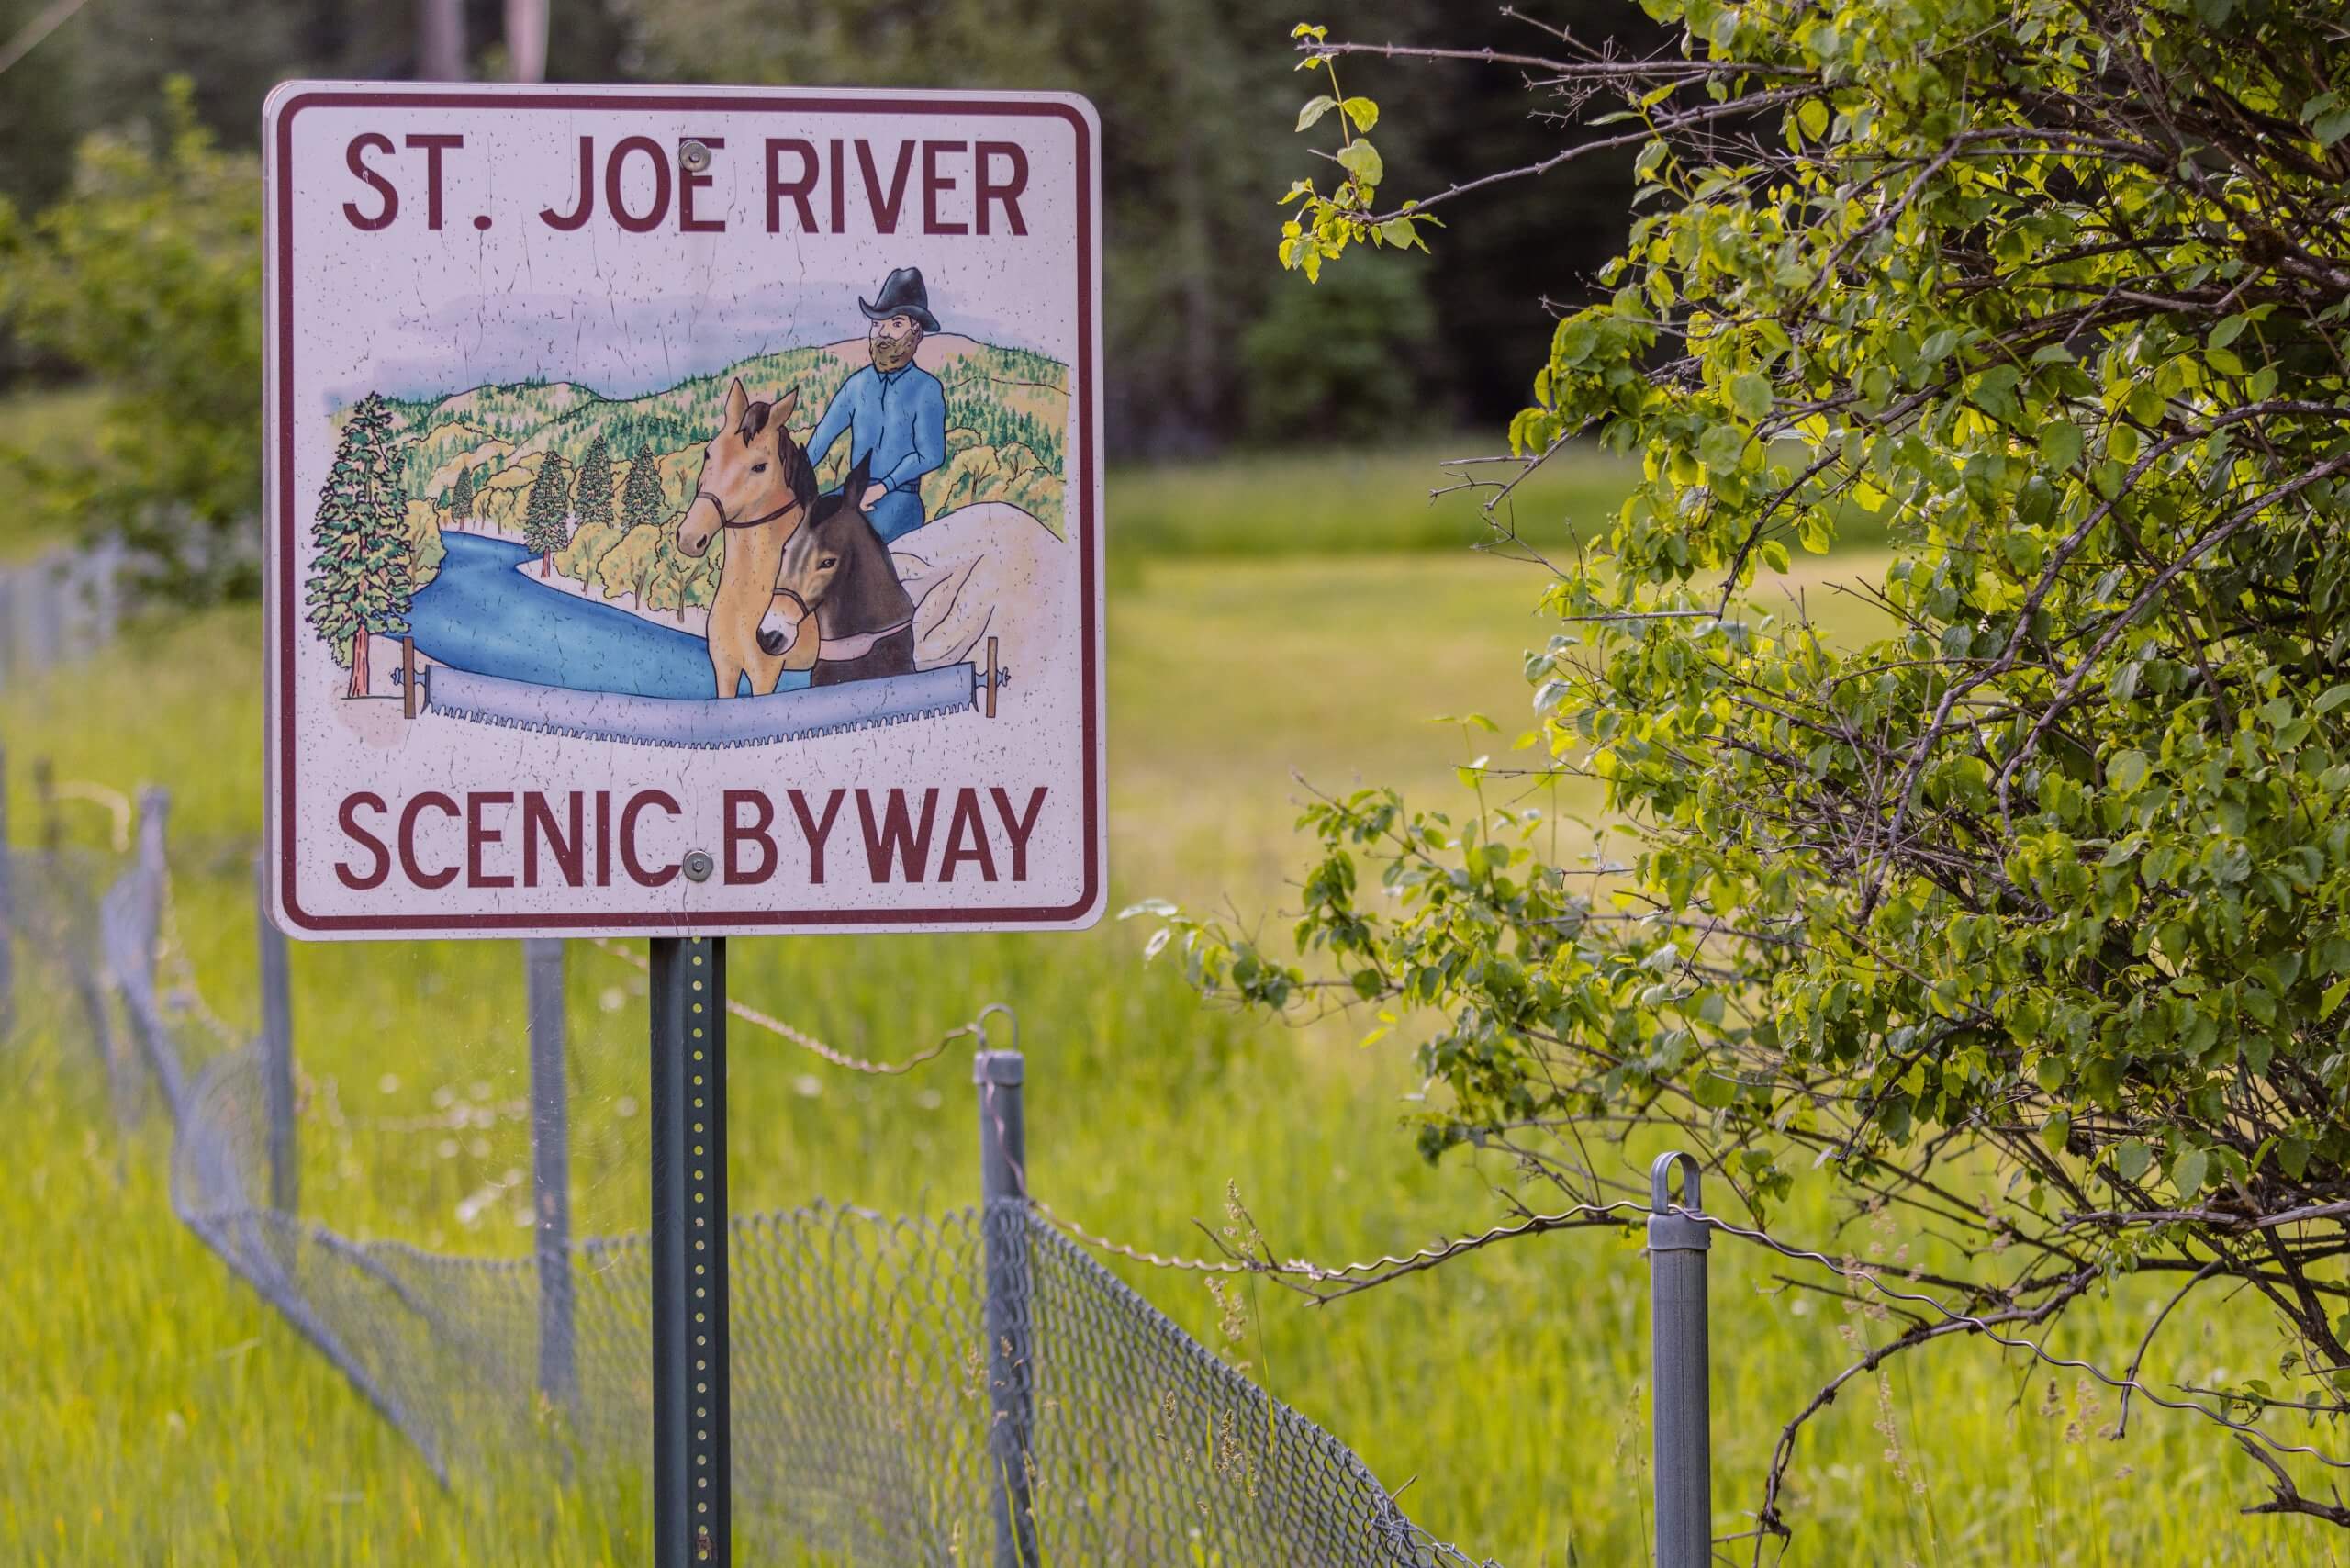 A roadside sign for Saint Joe River Scenic Byway.